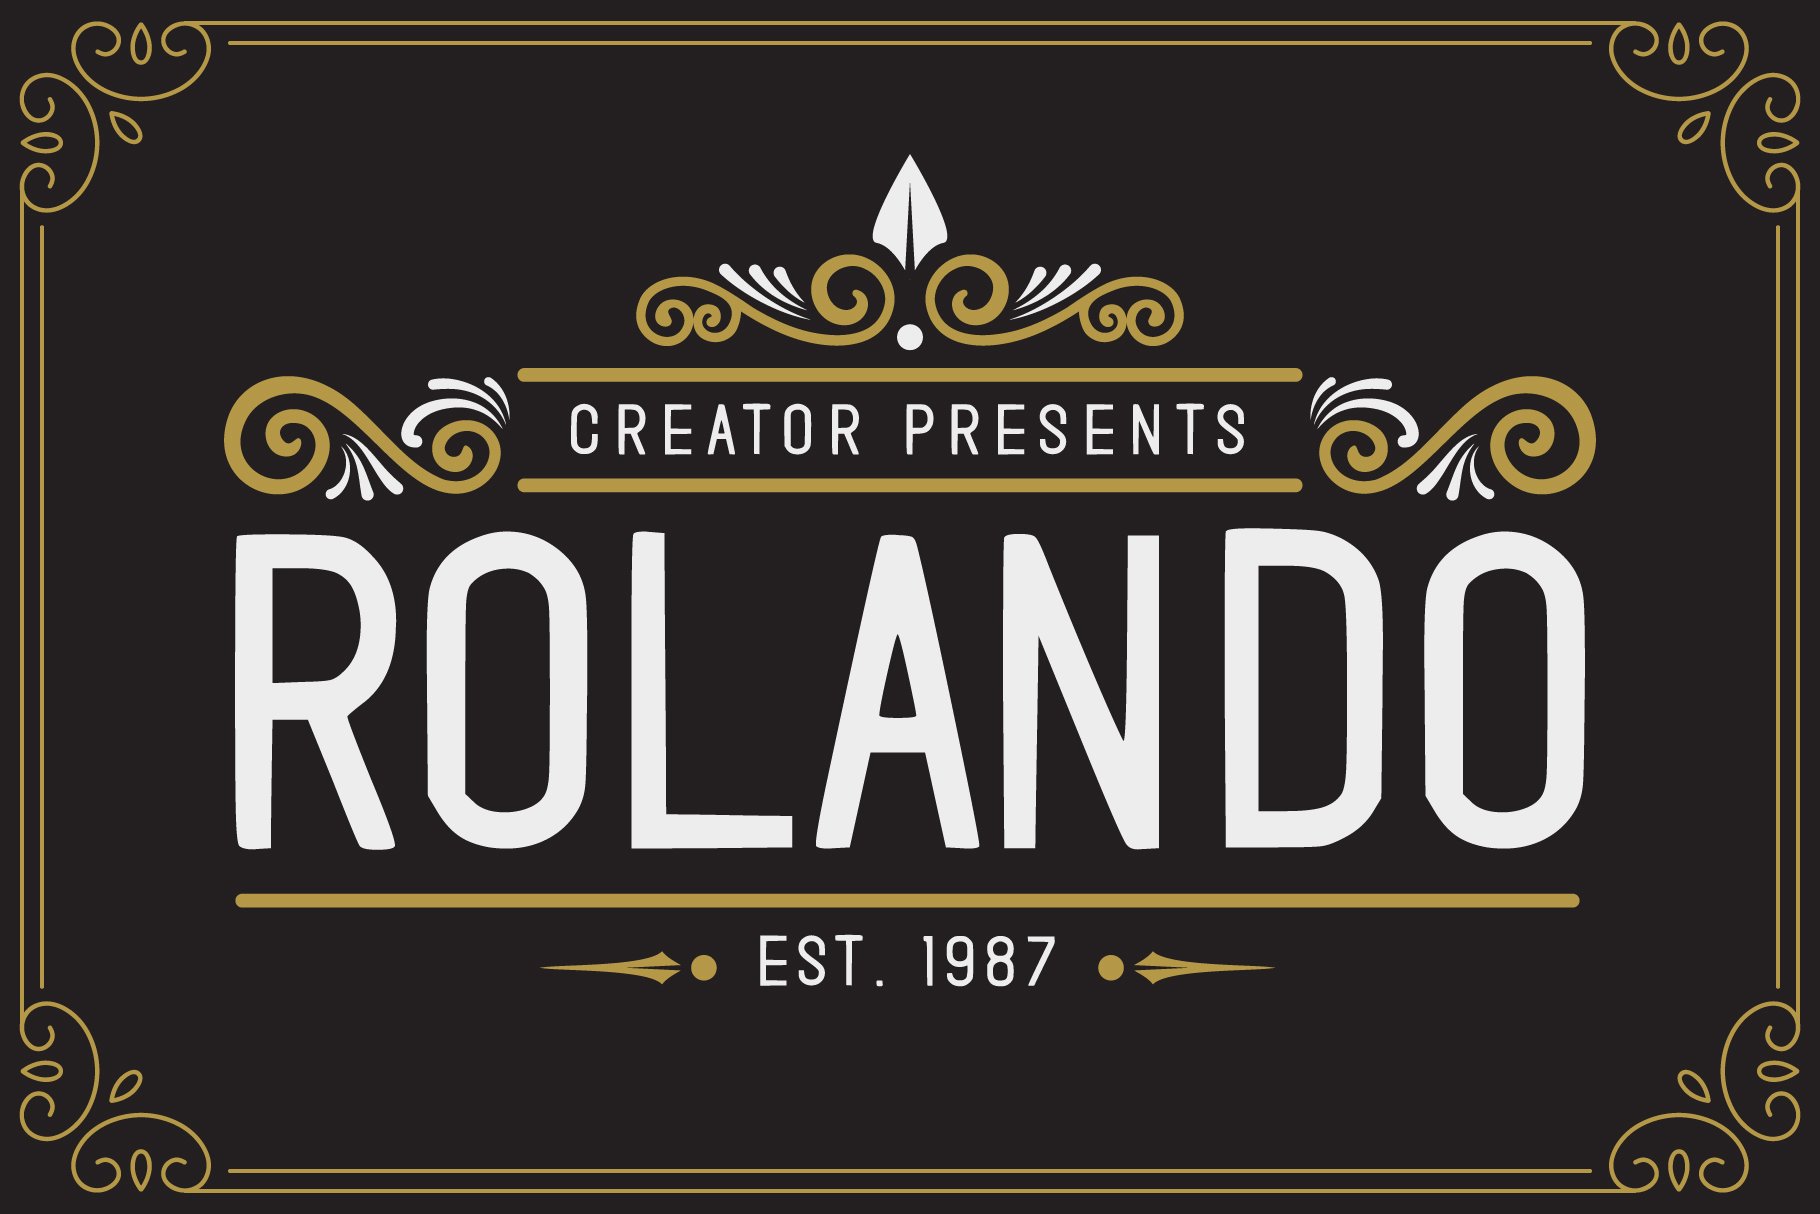 Rolando Vintage Font cover image.